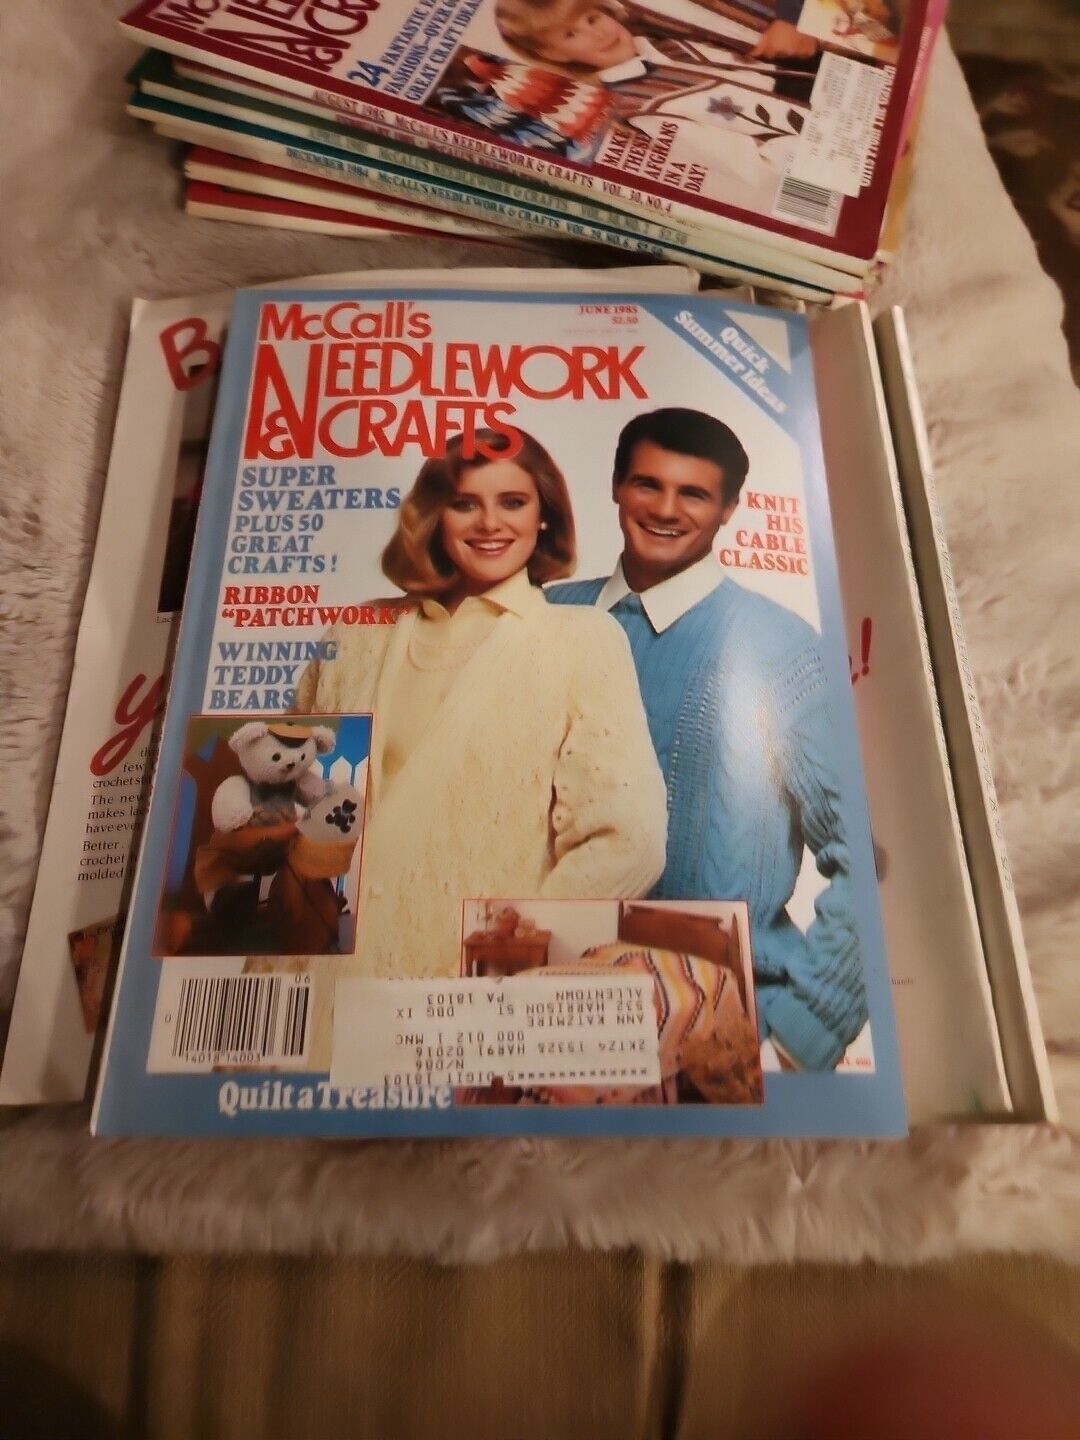 McCall's Needlework & Crafts Magazine June 1985 teddy bears sweaters 50 crafts